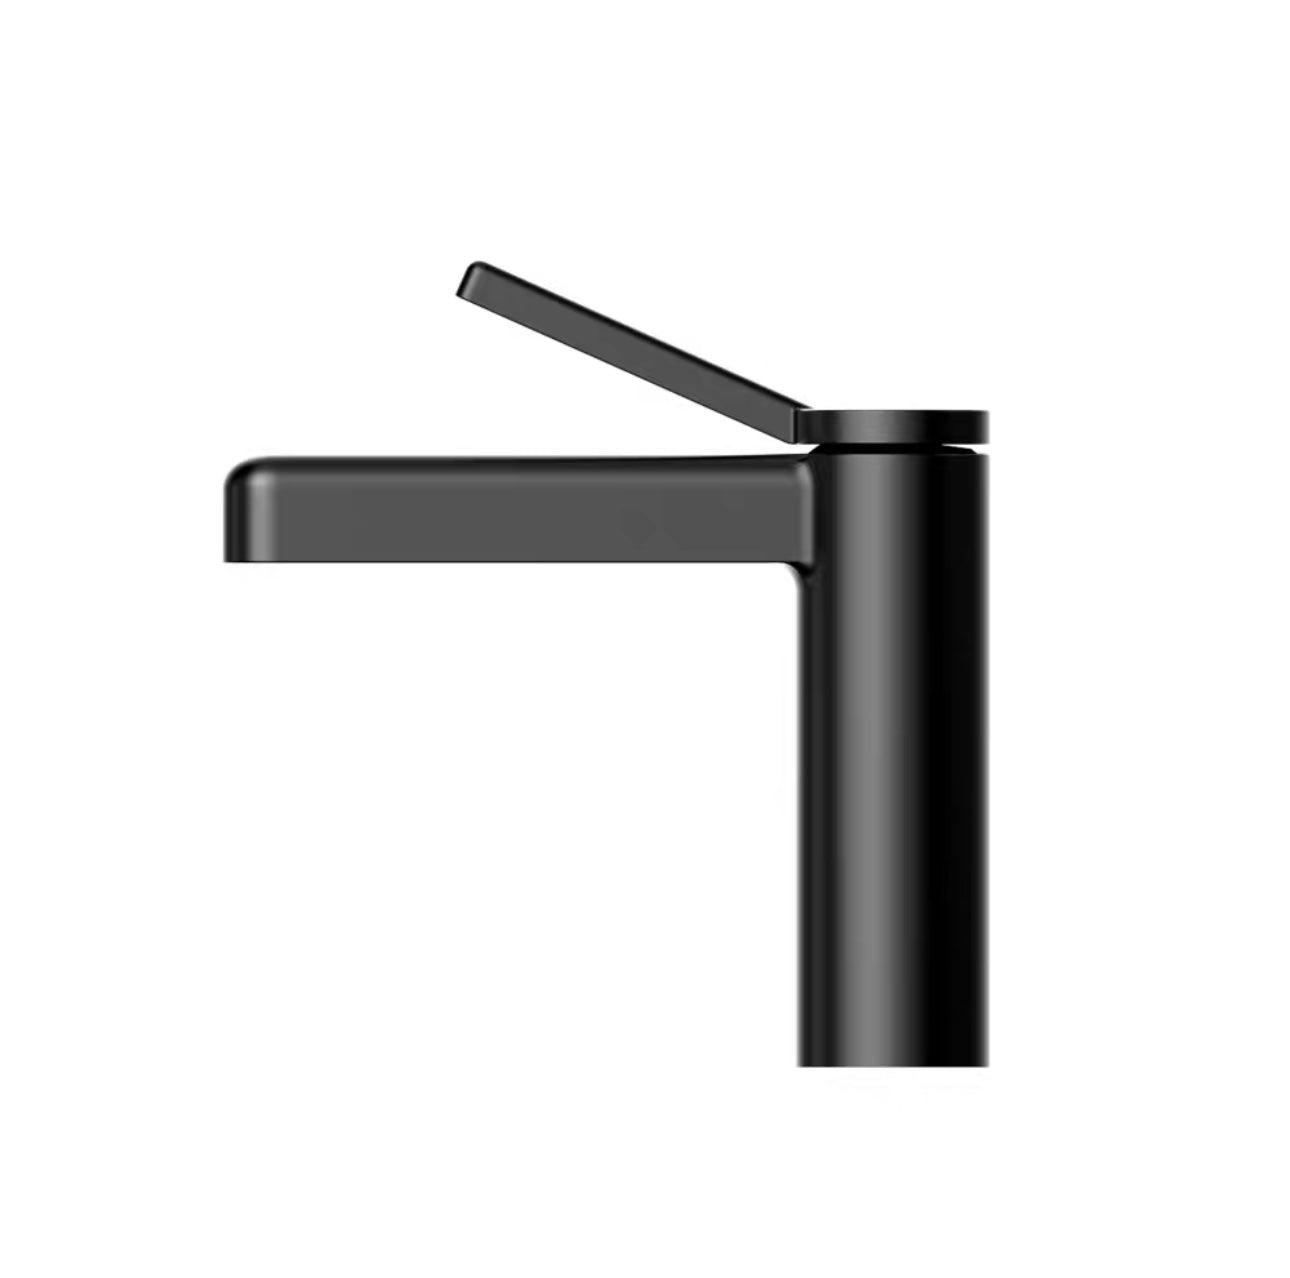 COMO / Bathroom Faucet - Handle Shop Couture 